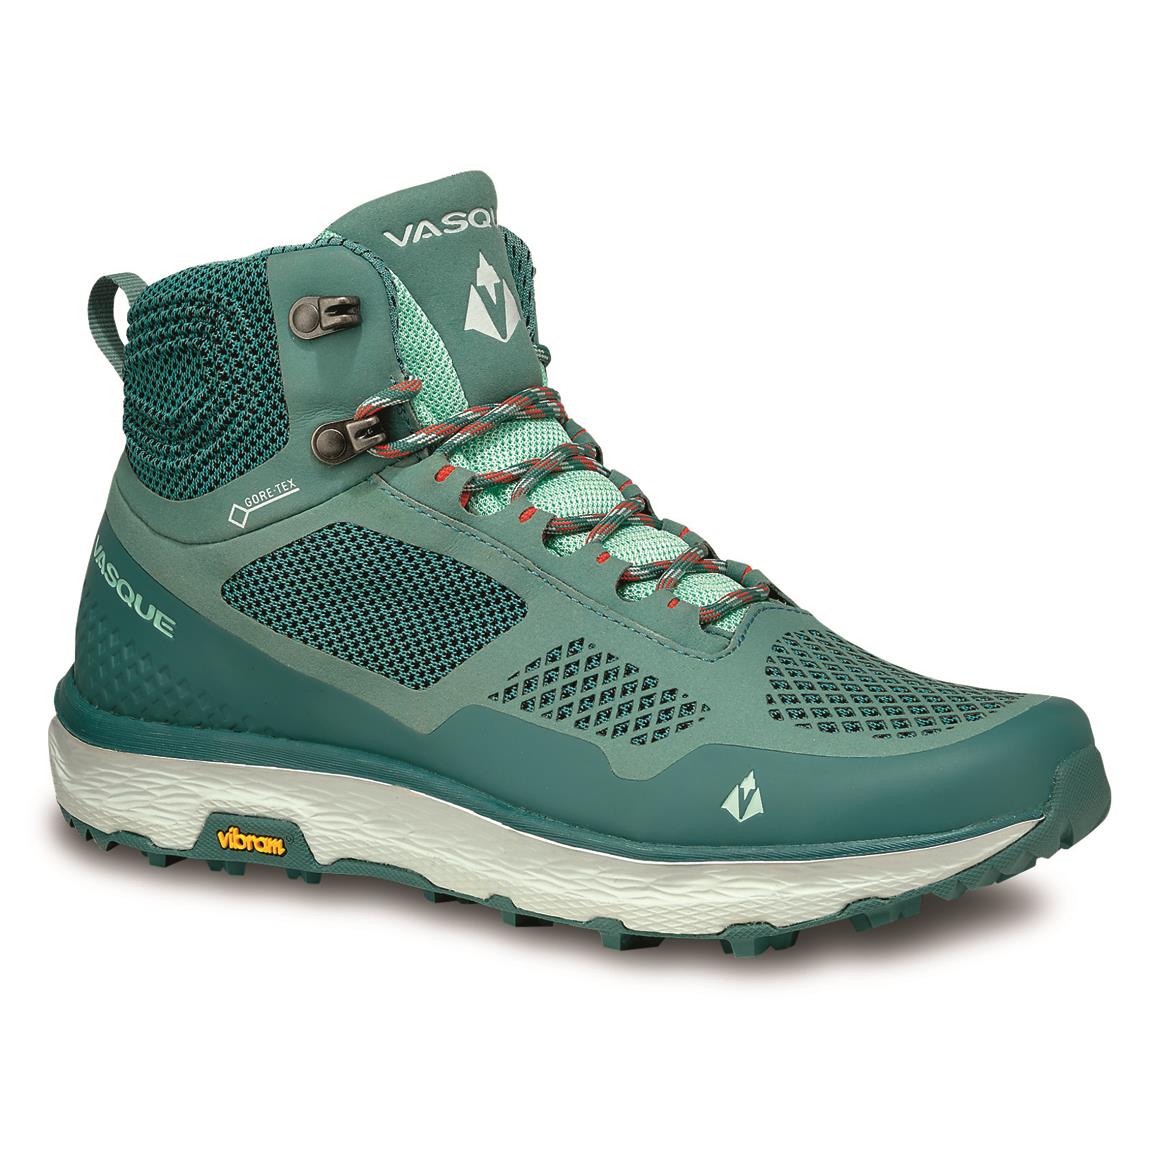 Vasque Women's Breeze LT GTX Waterproof Hiking Boots, Trellis/mist Green